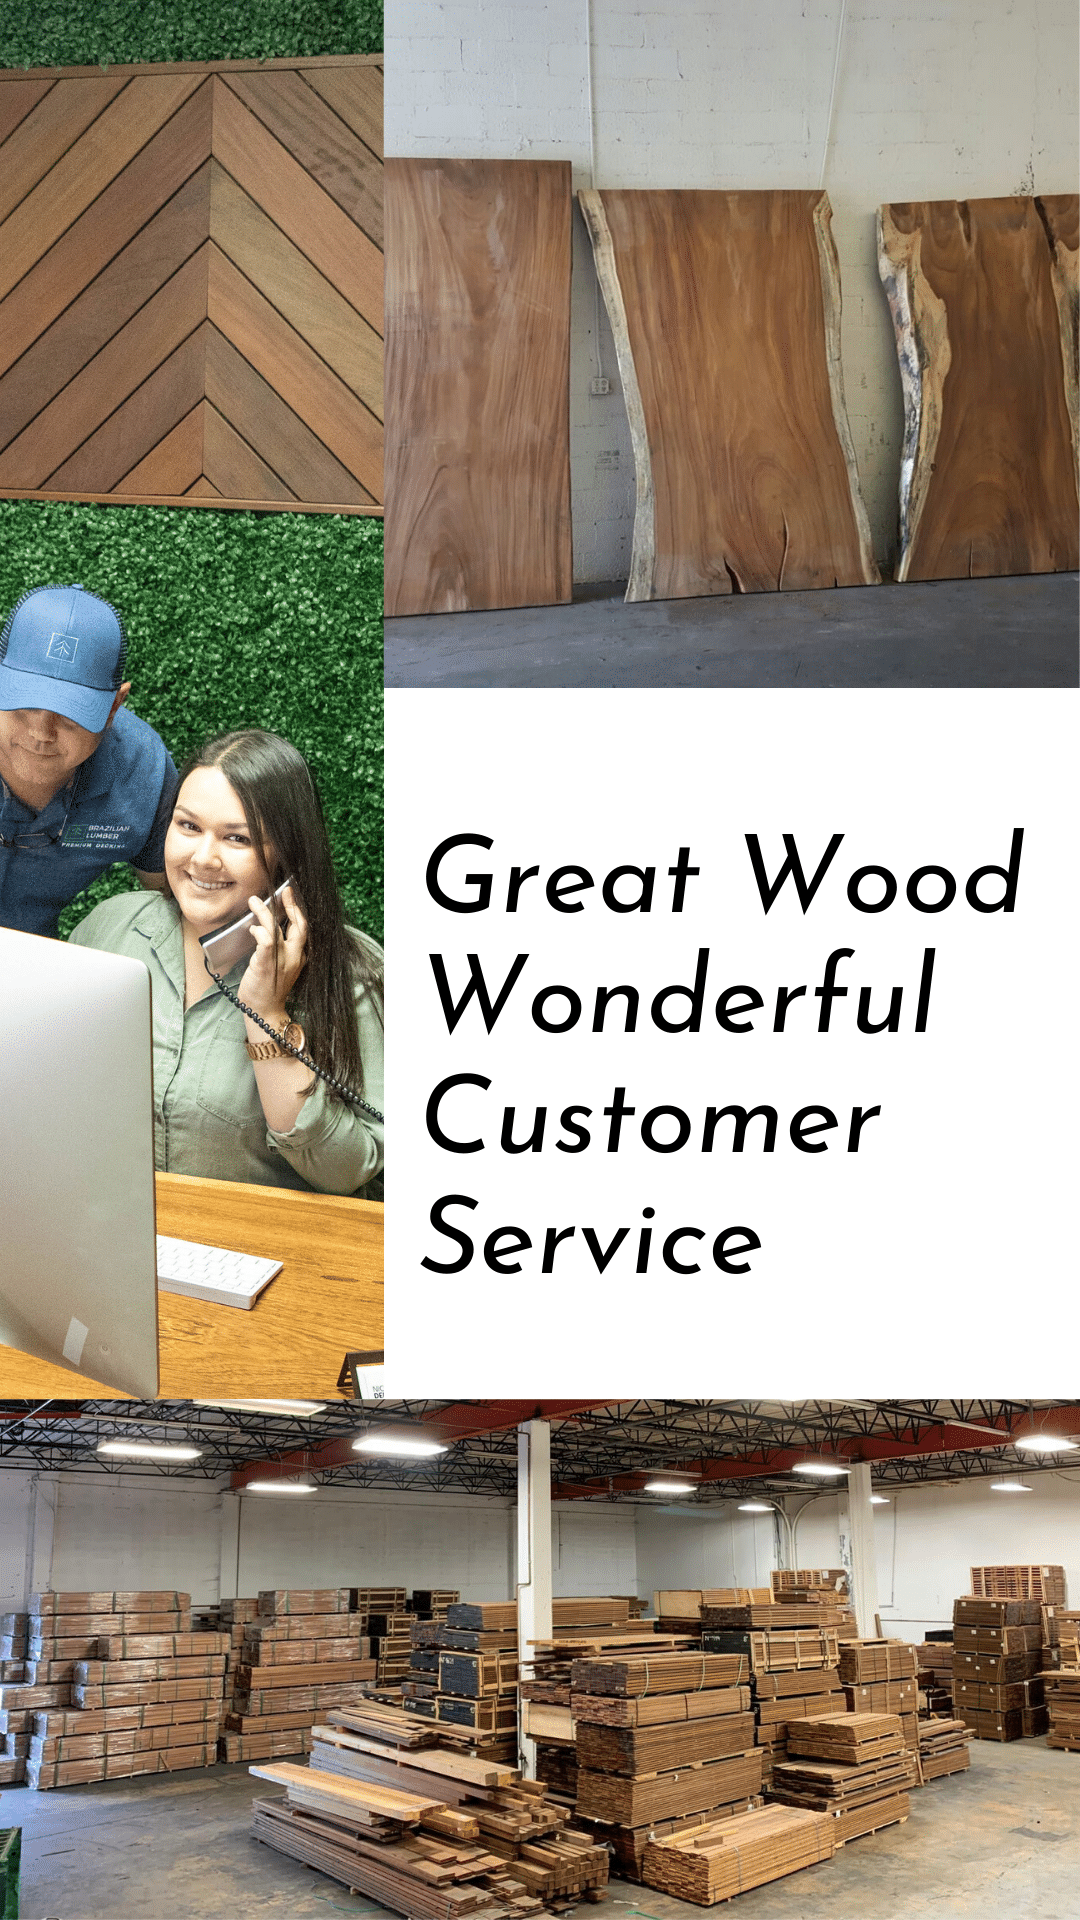 Great Wood Wonderful Customer Service